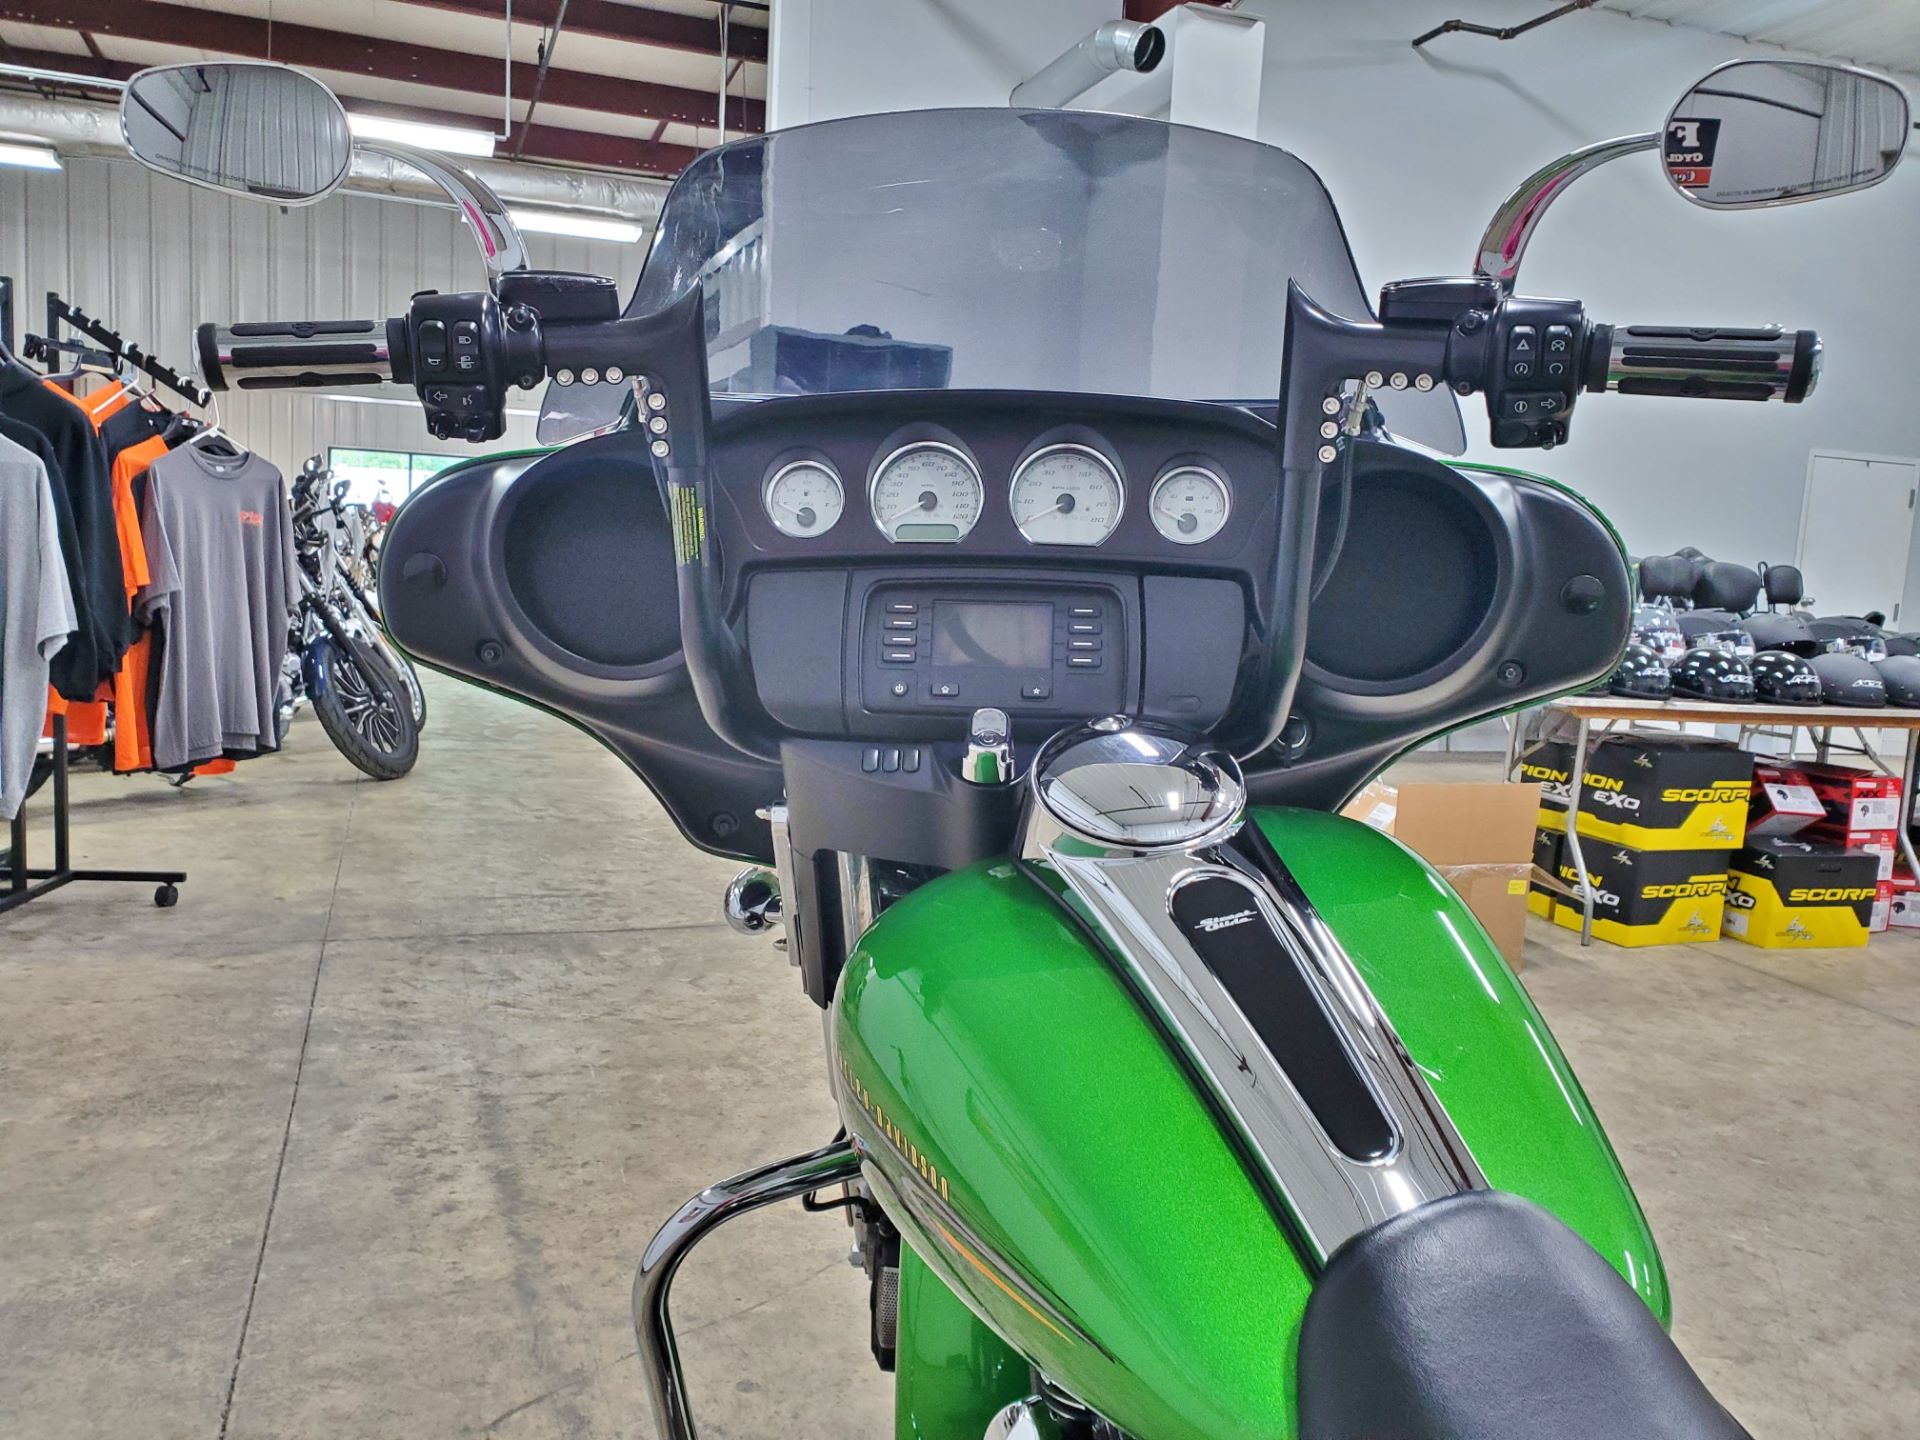 2015 Harley-Davidson Street Glide® in Sandusky, Ohio - Photo 11